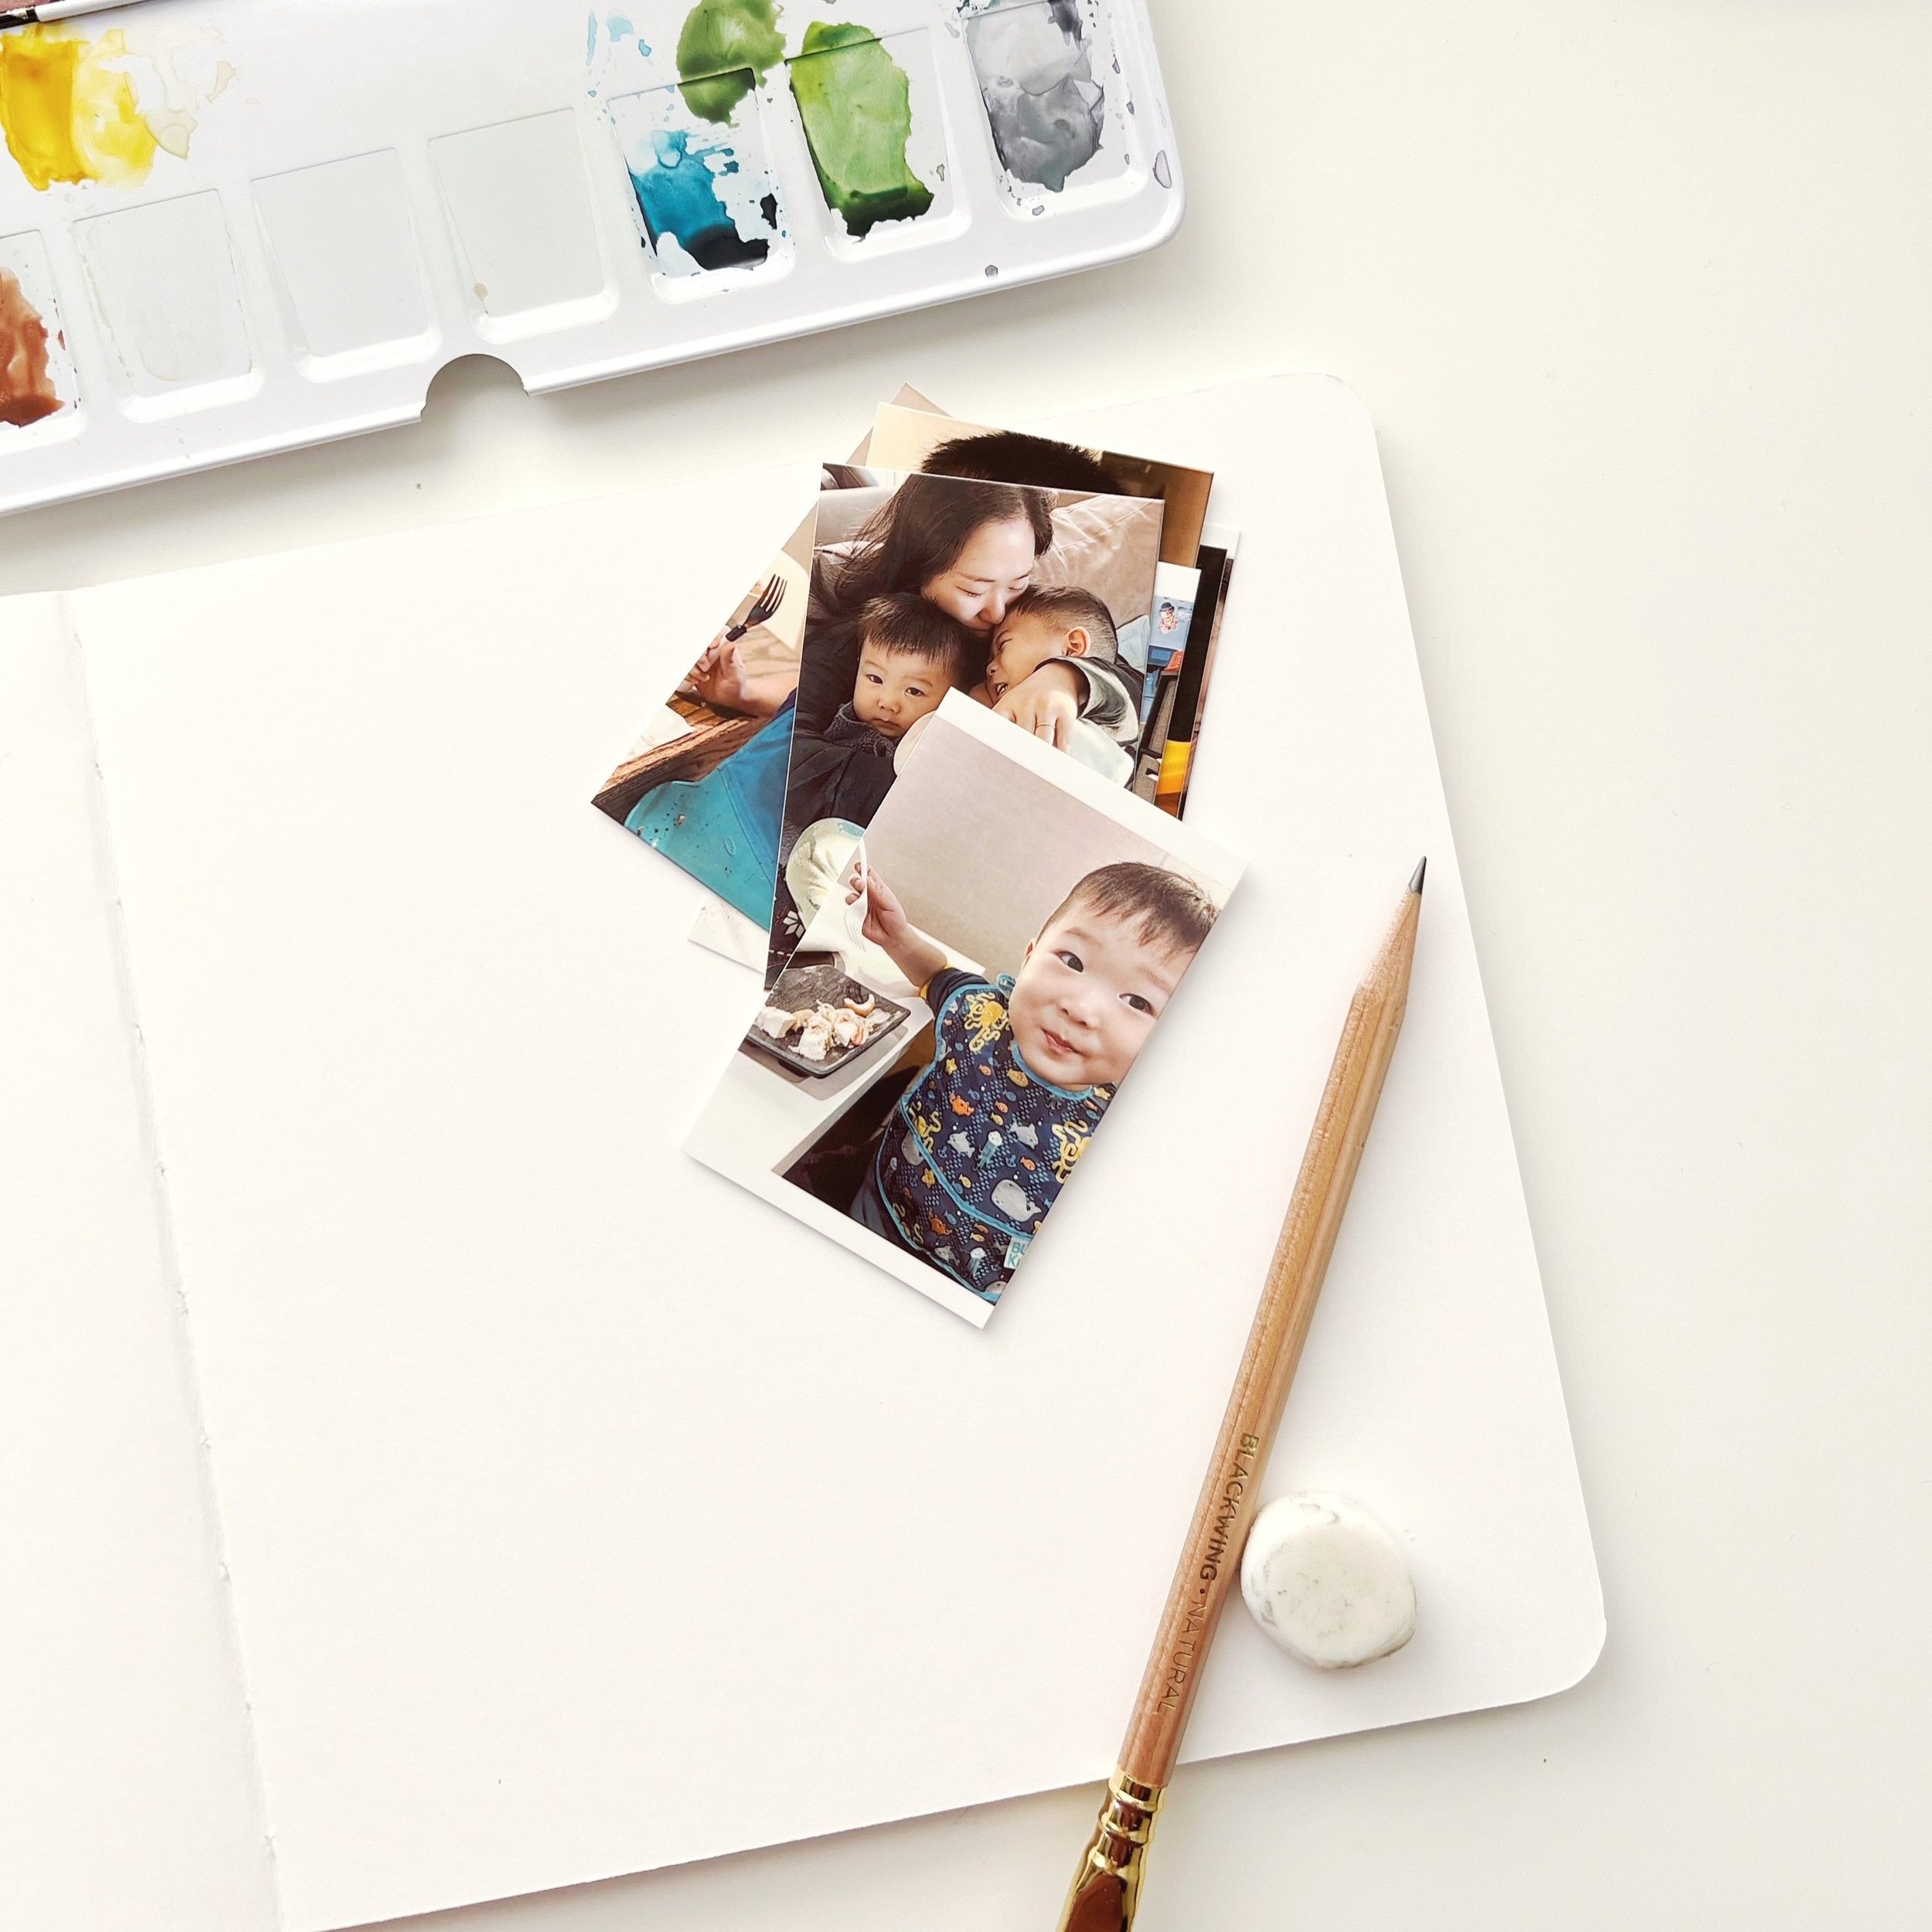 The Art of Sketch Journaling: Get Inspired and Get Started! — Everleaf  Designs